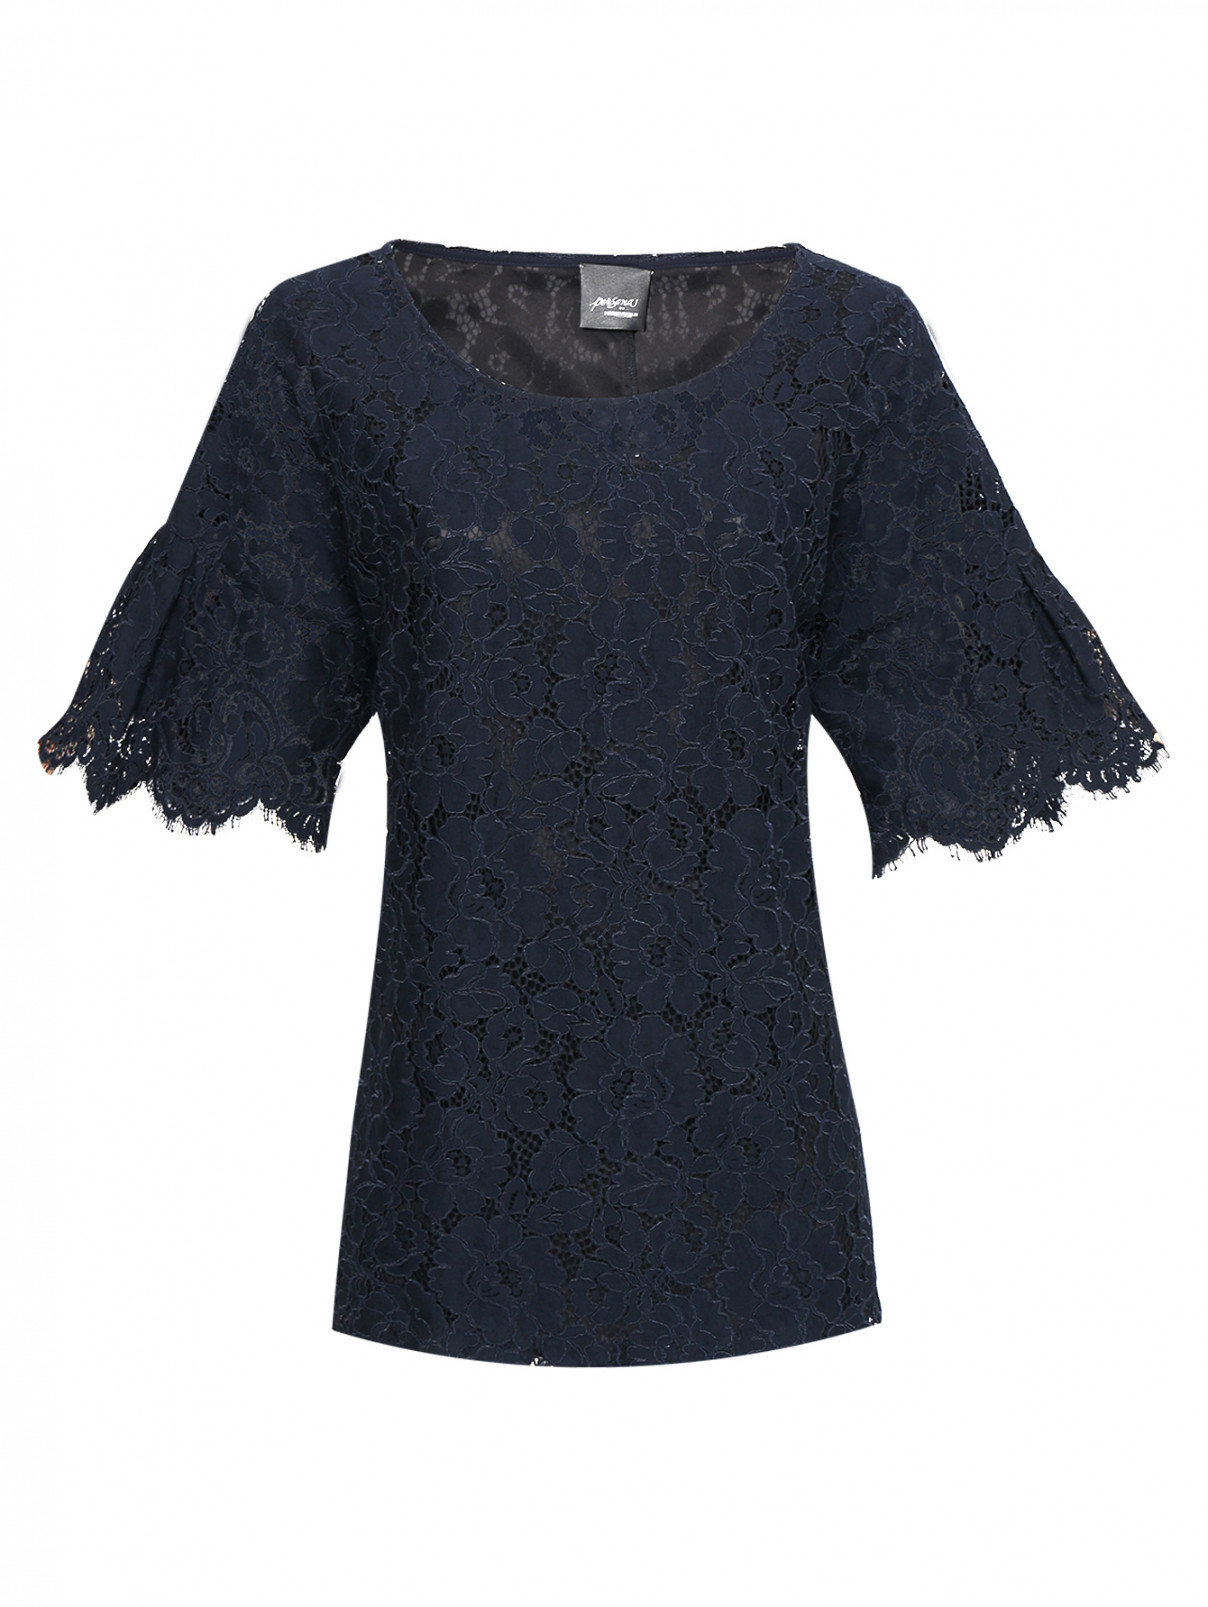 Блуза с короткими рукавами Persona by Marina Rinaldi  –  Общий вид  – Цвет:  Синий